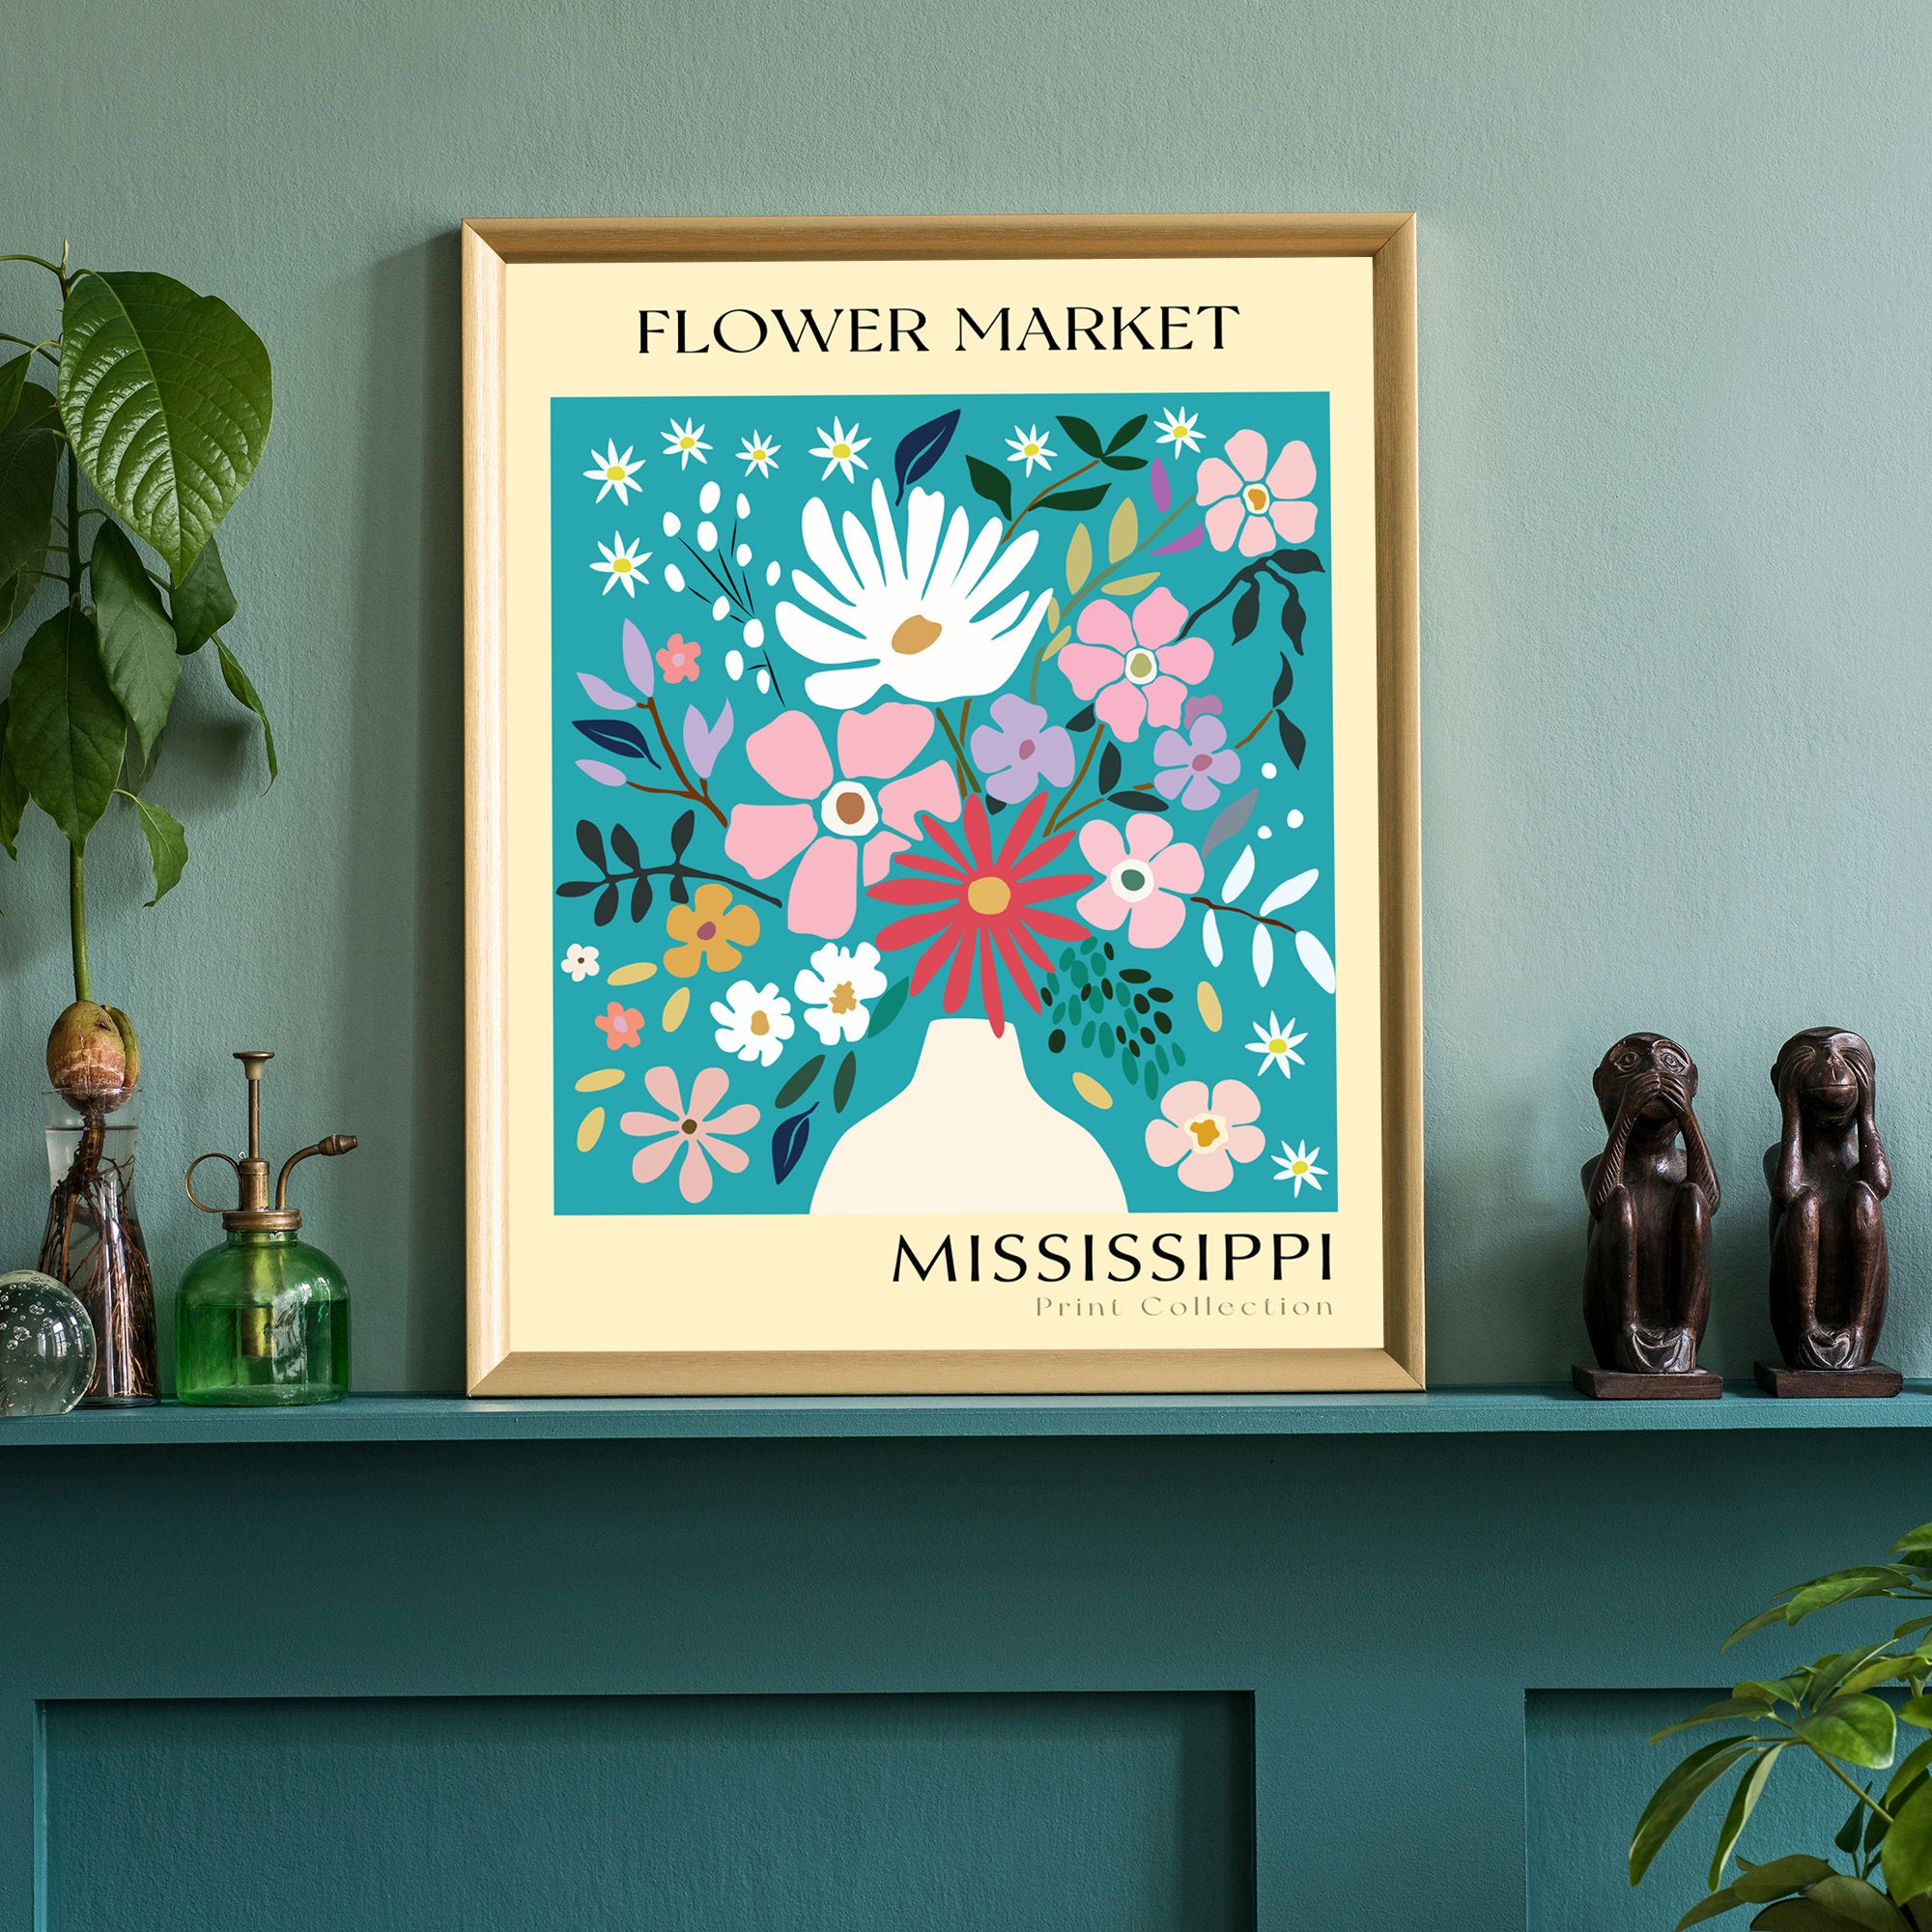 Mississippi State flower print, USA state poster, Mississippi flower market poster, Botanical poster, Nature poster artwork, Boho floral art